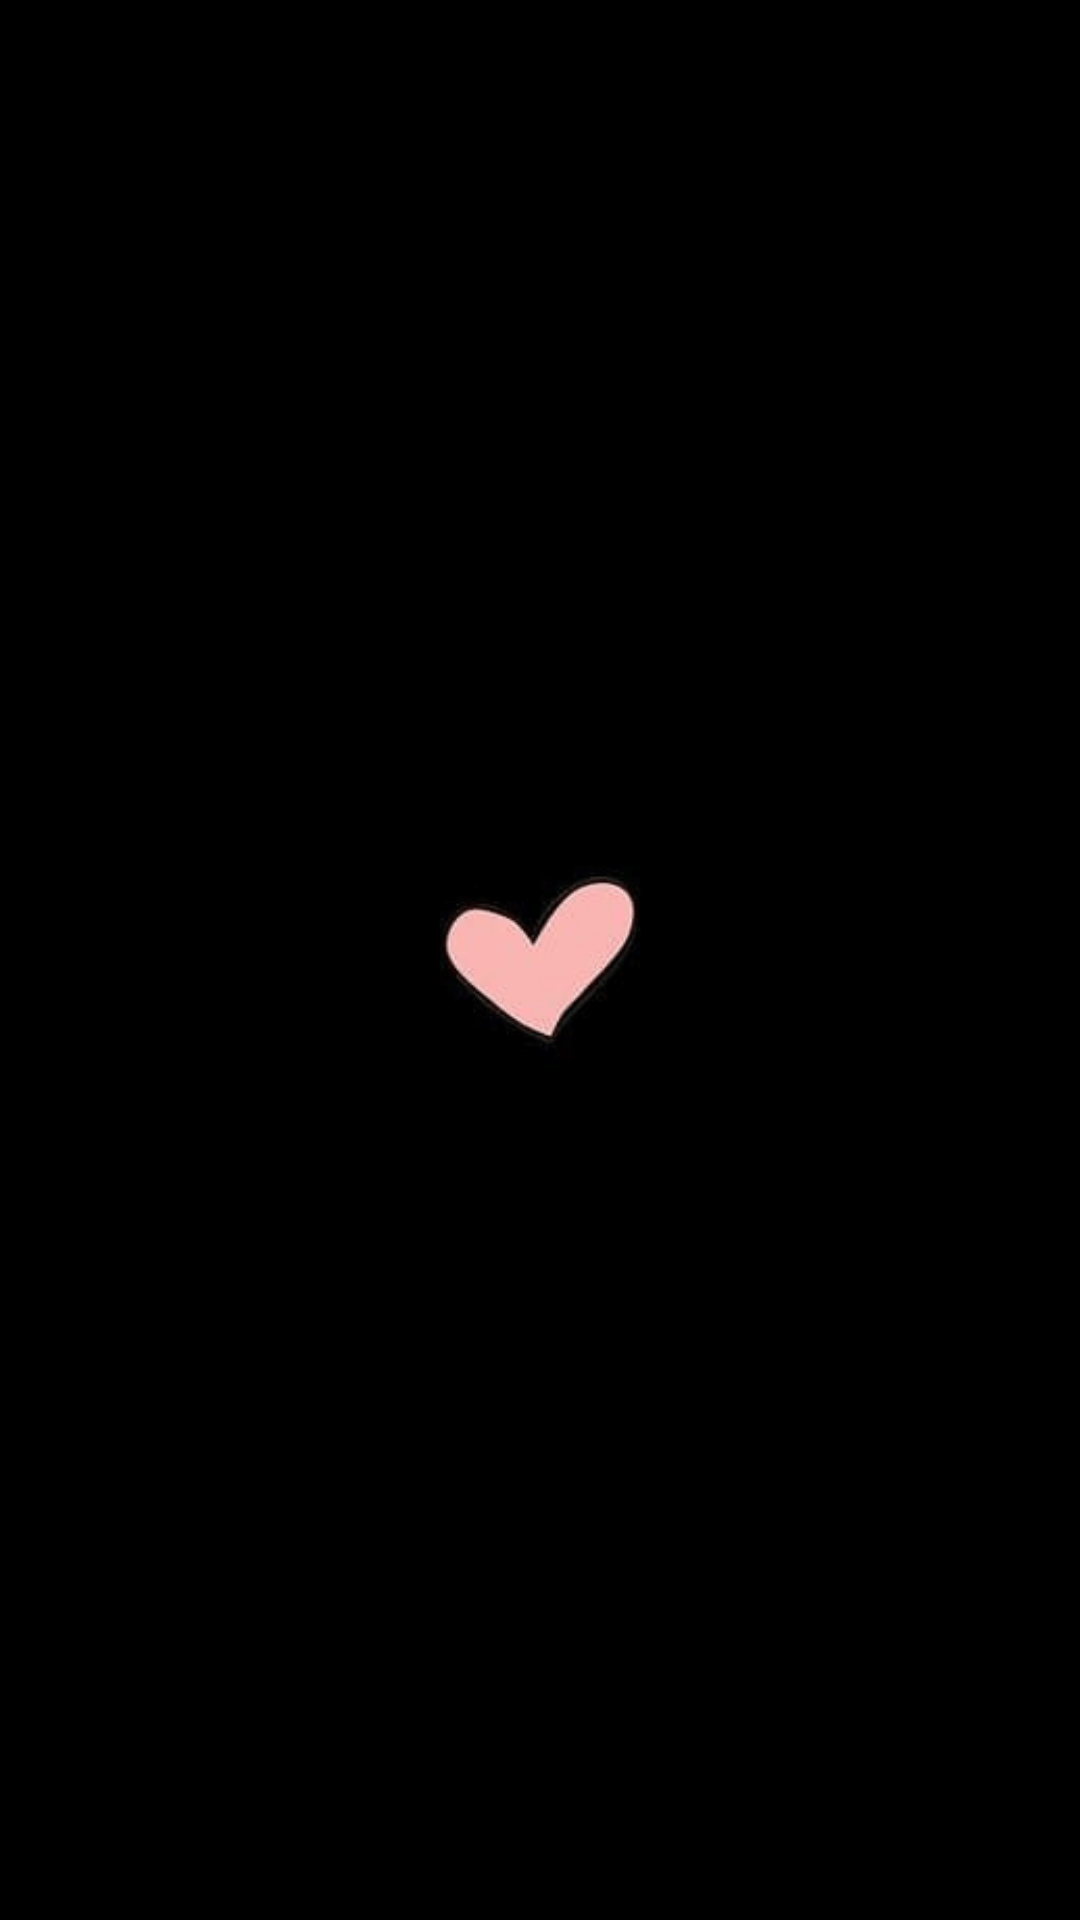 A pink heart on black background - Heart, black heart